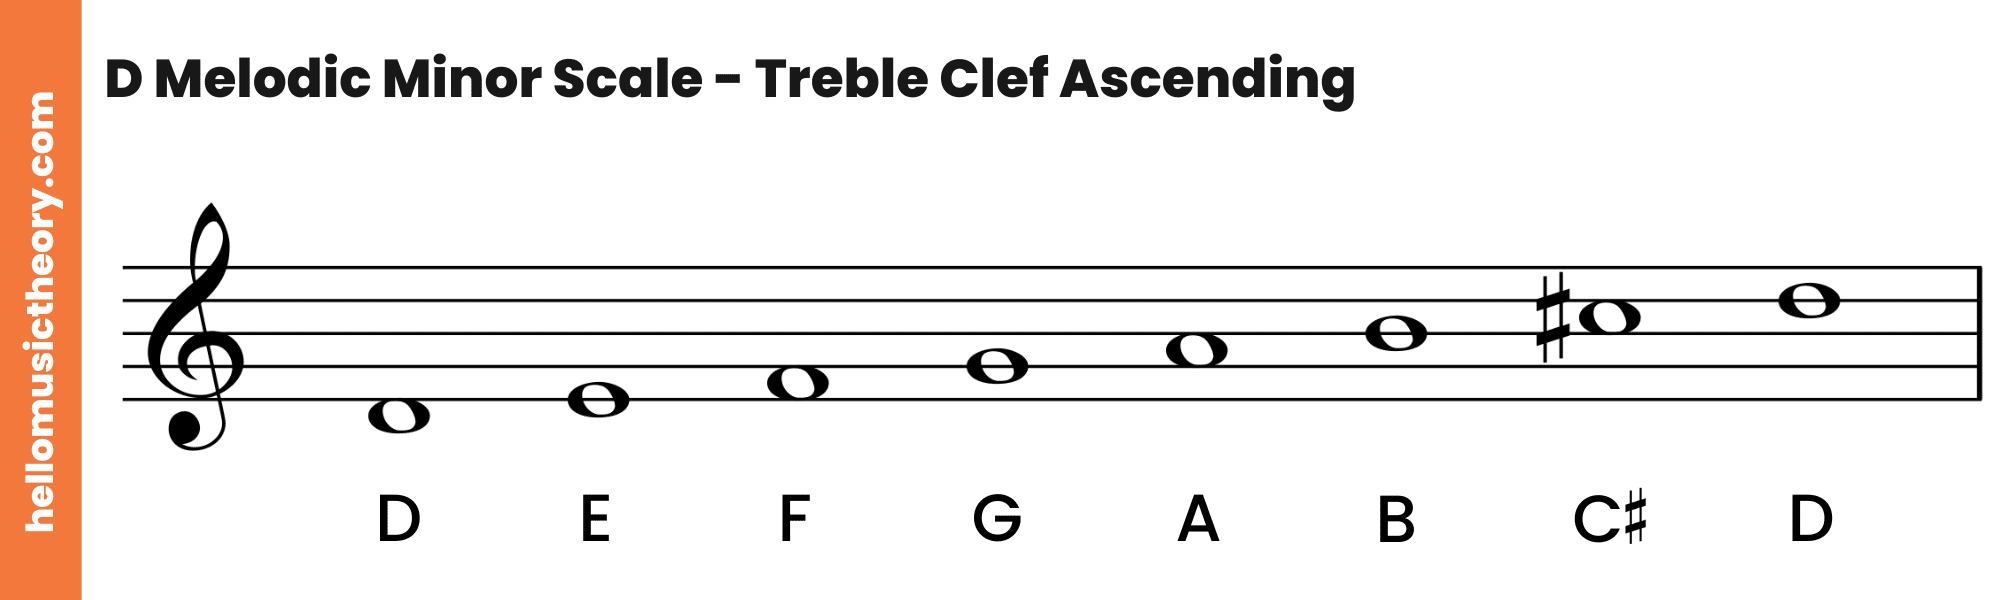 D Melodic Minor Scale Treble Clef Ascending